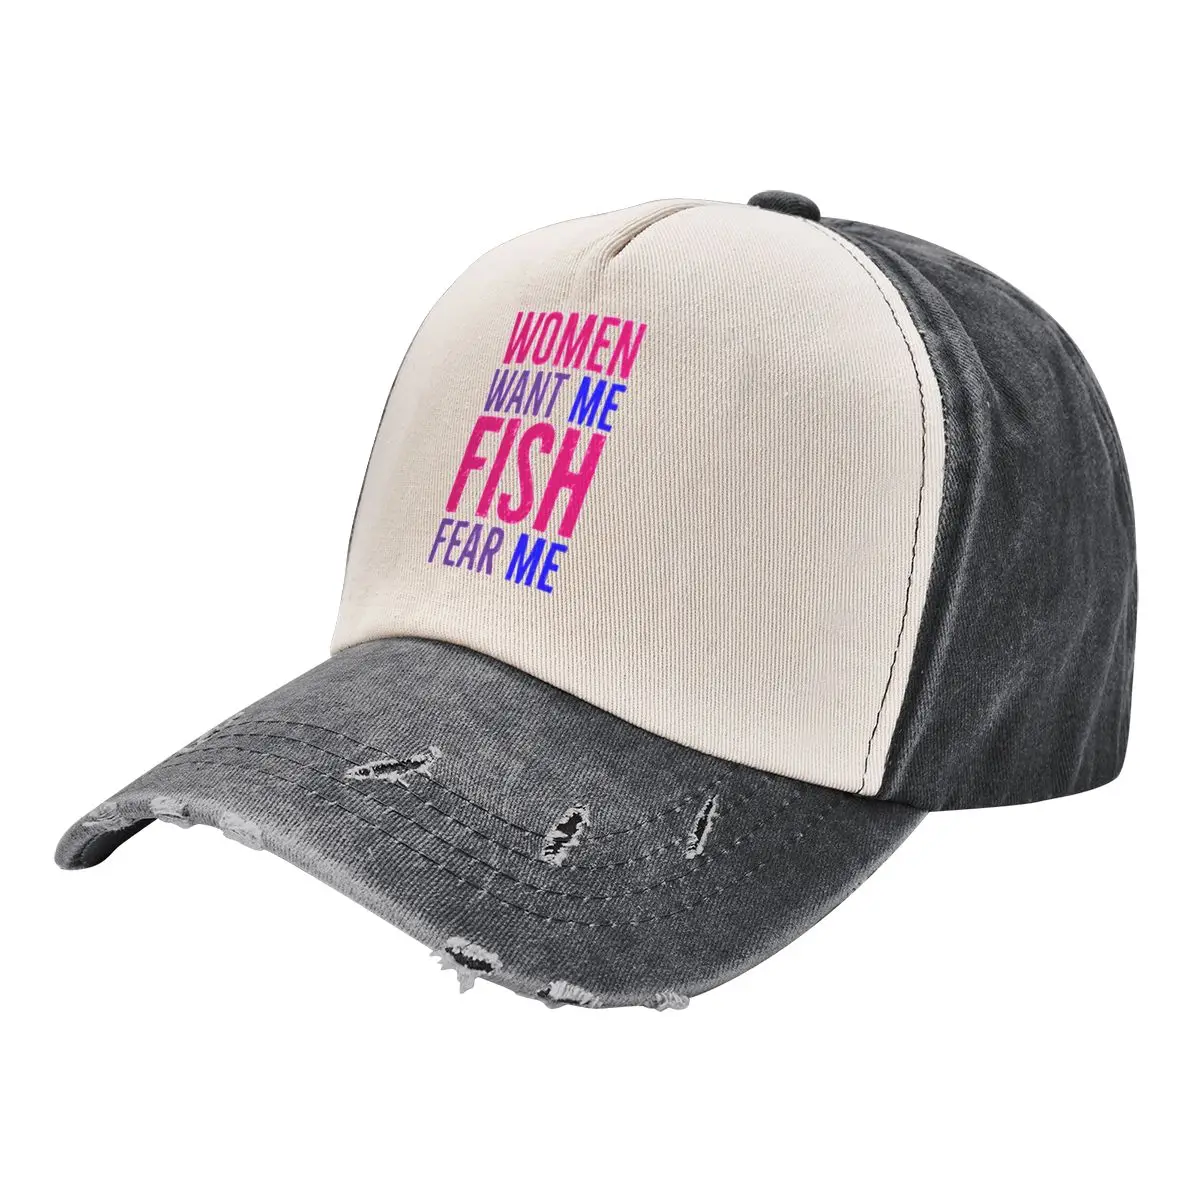 

Women Want Me Fish Fear Me - Bisexual Pride Baseball Cap Wild Ball Hat Snapback Cap Beach Hats For Men Women's